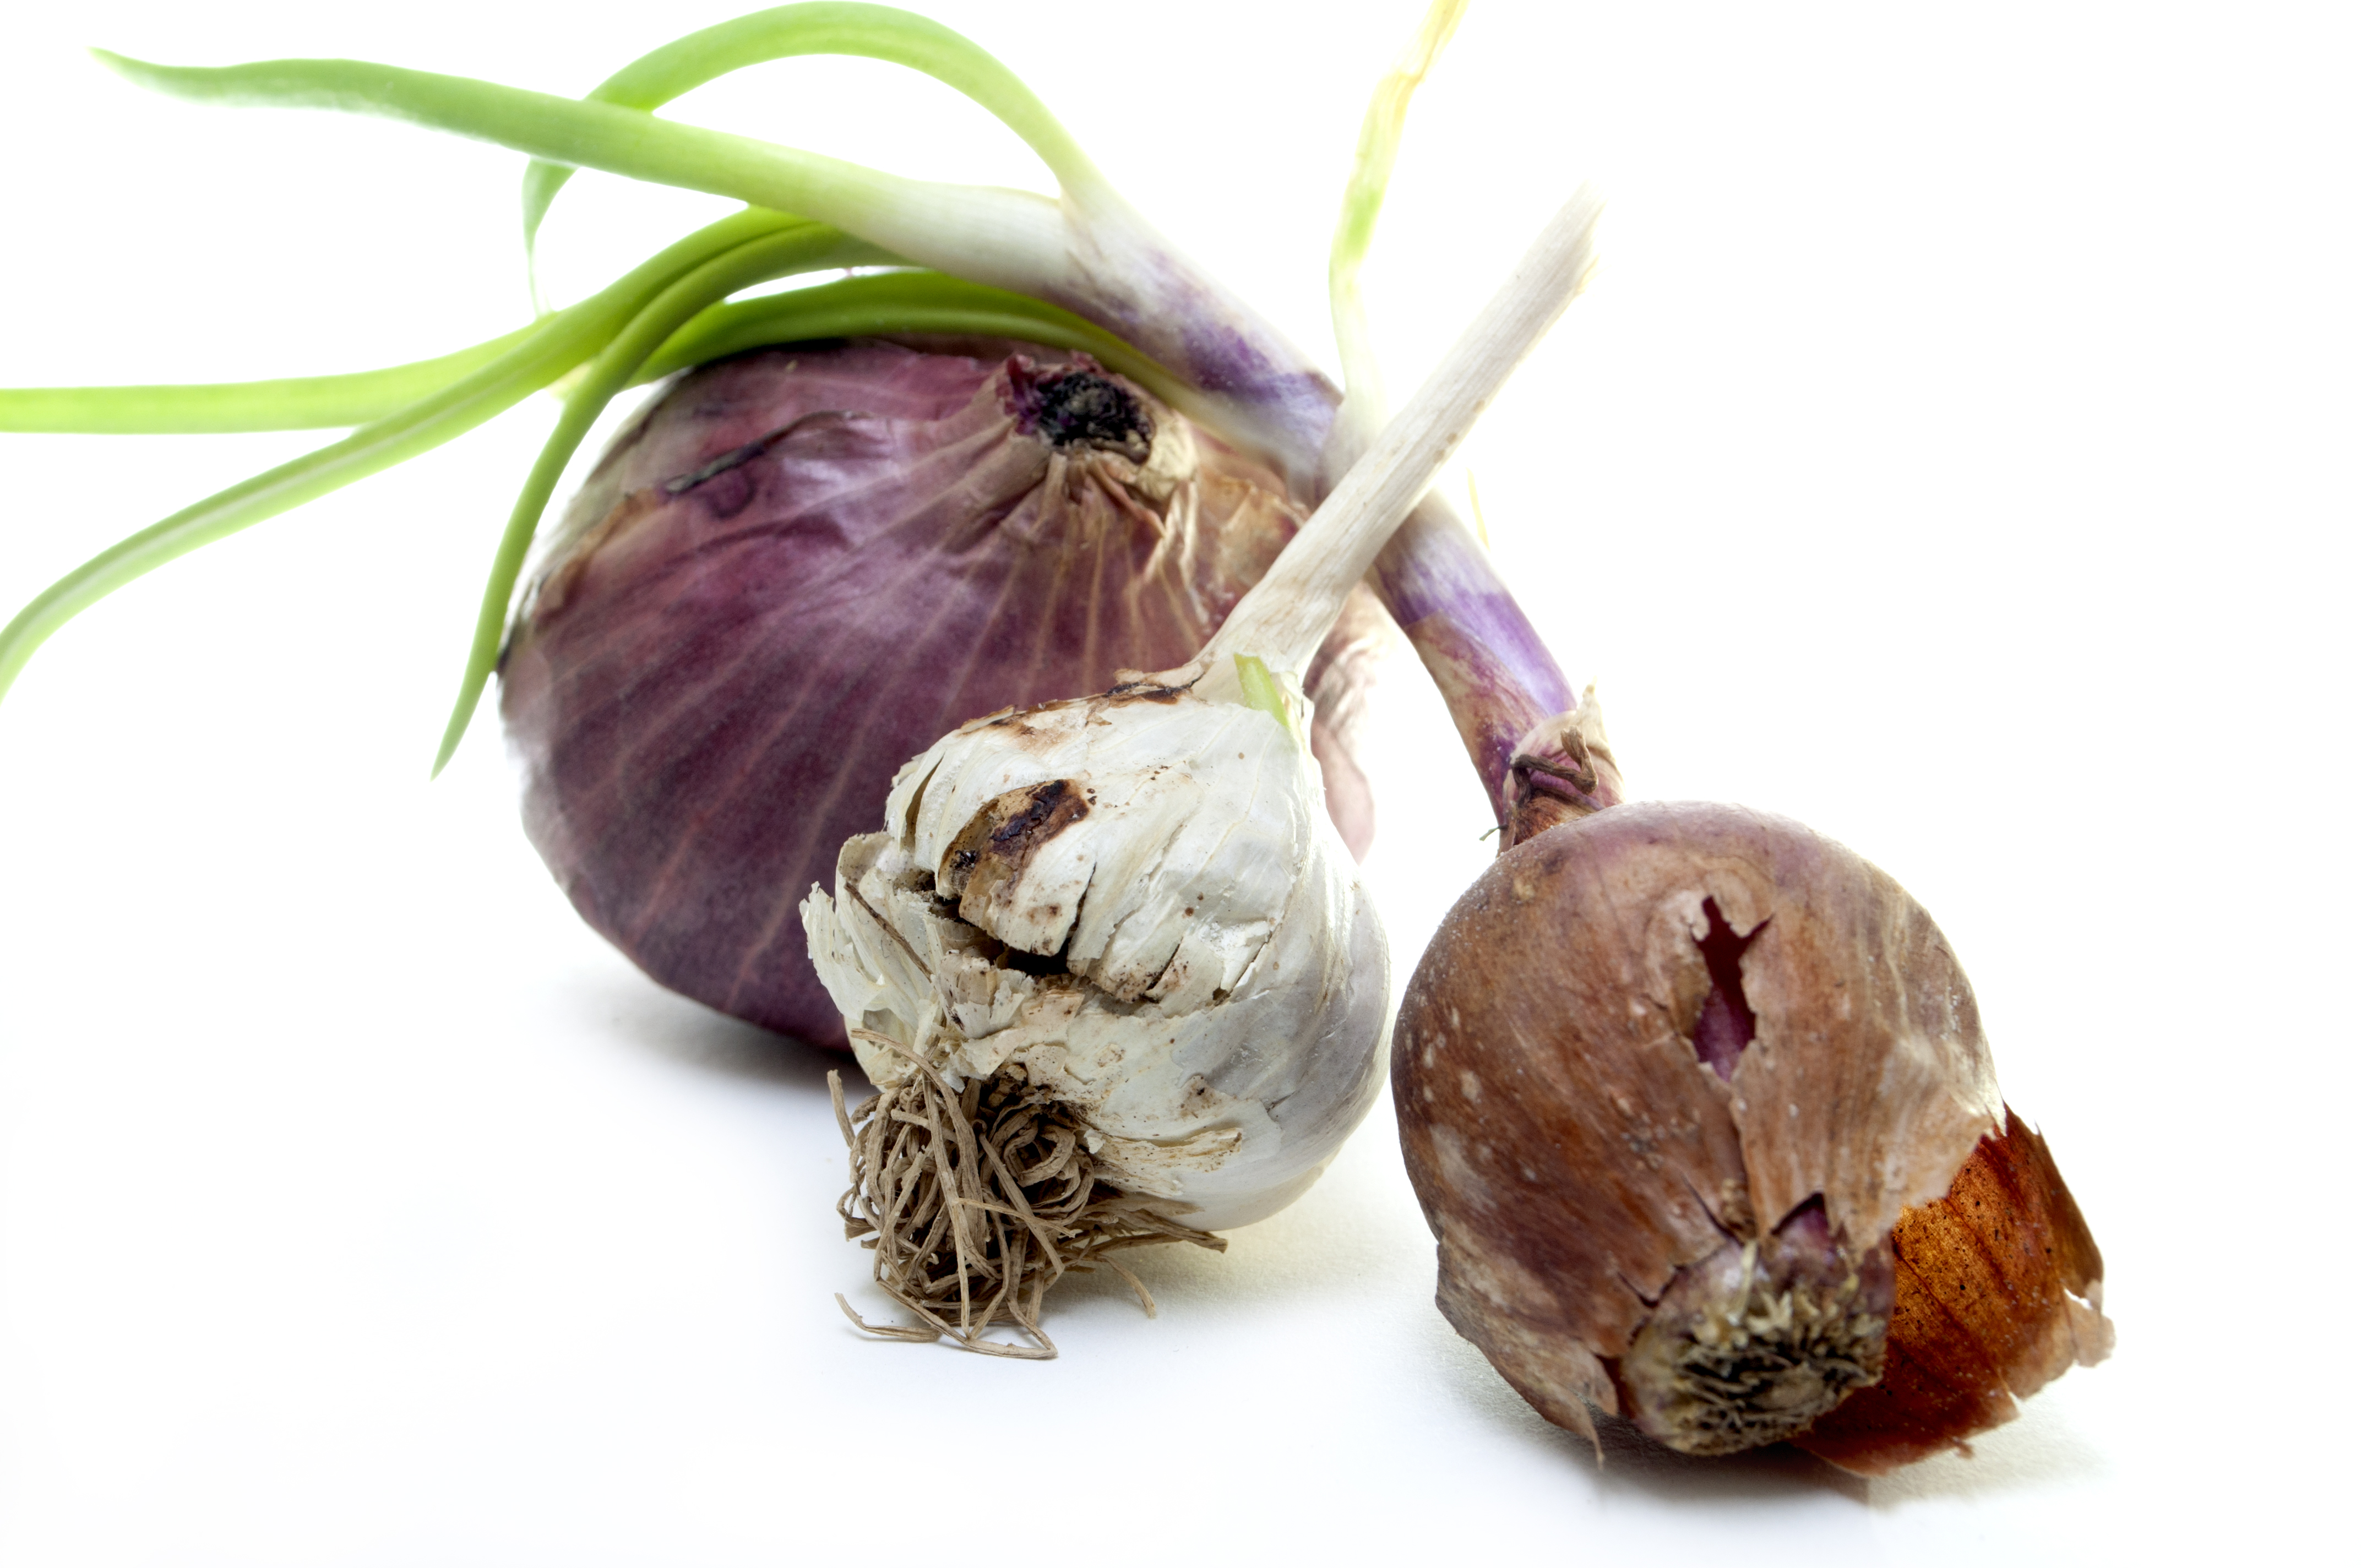 Onions & garlic photo